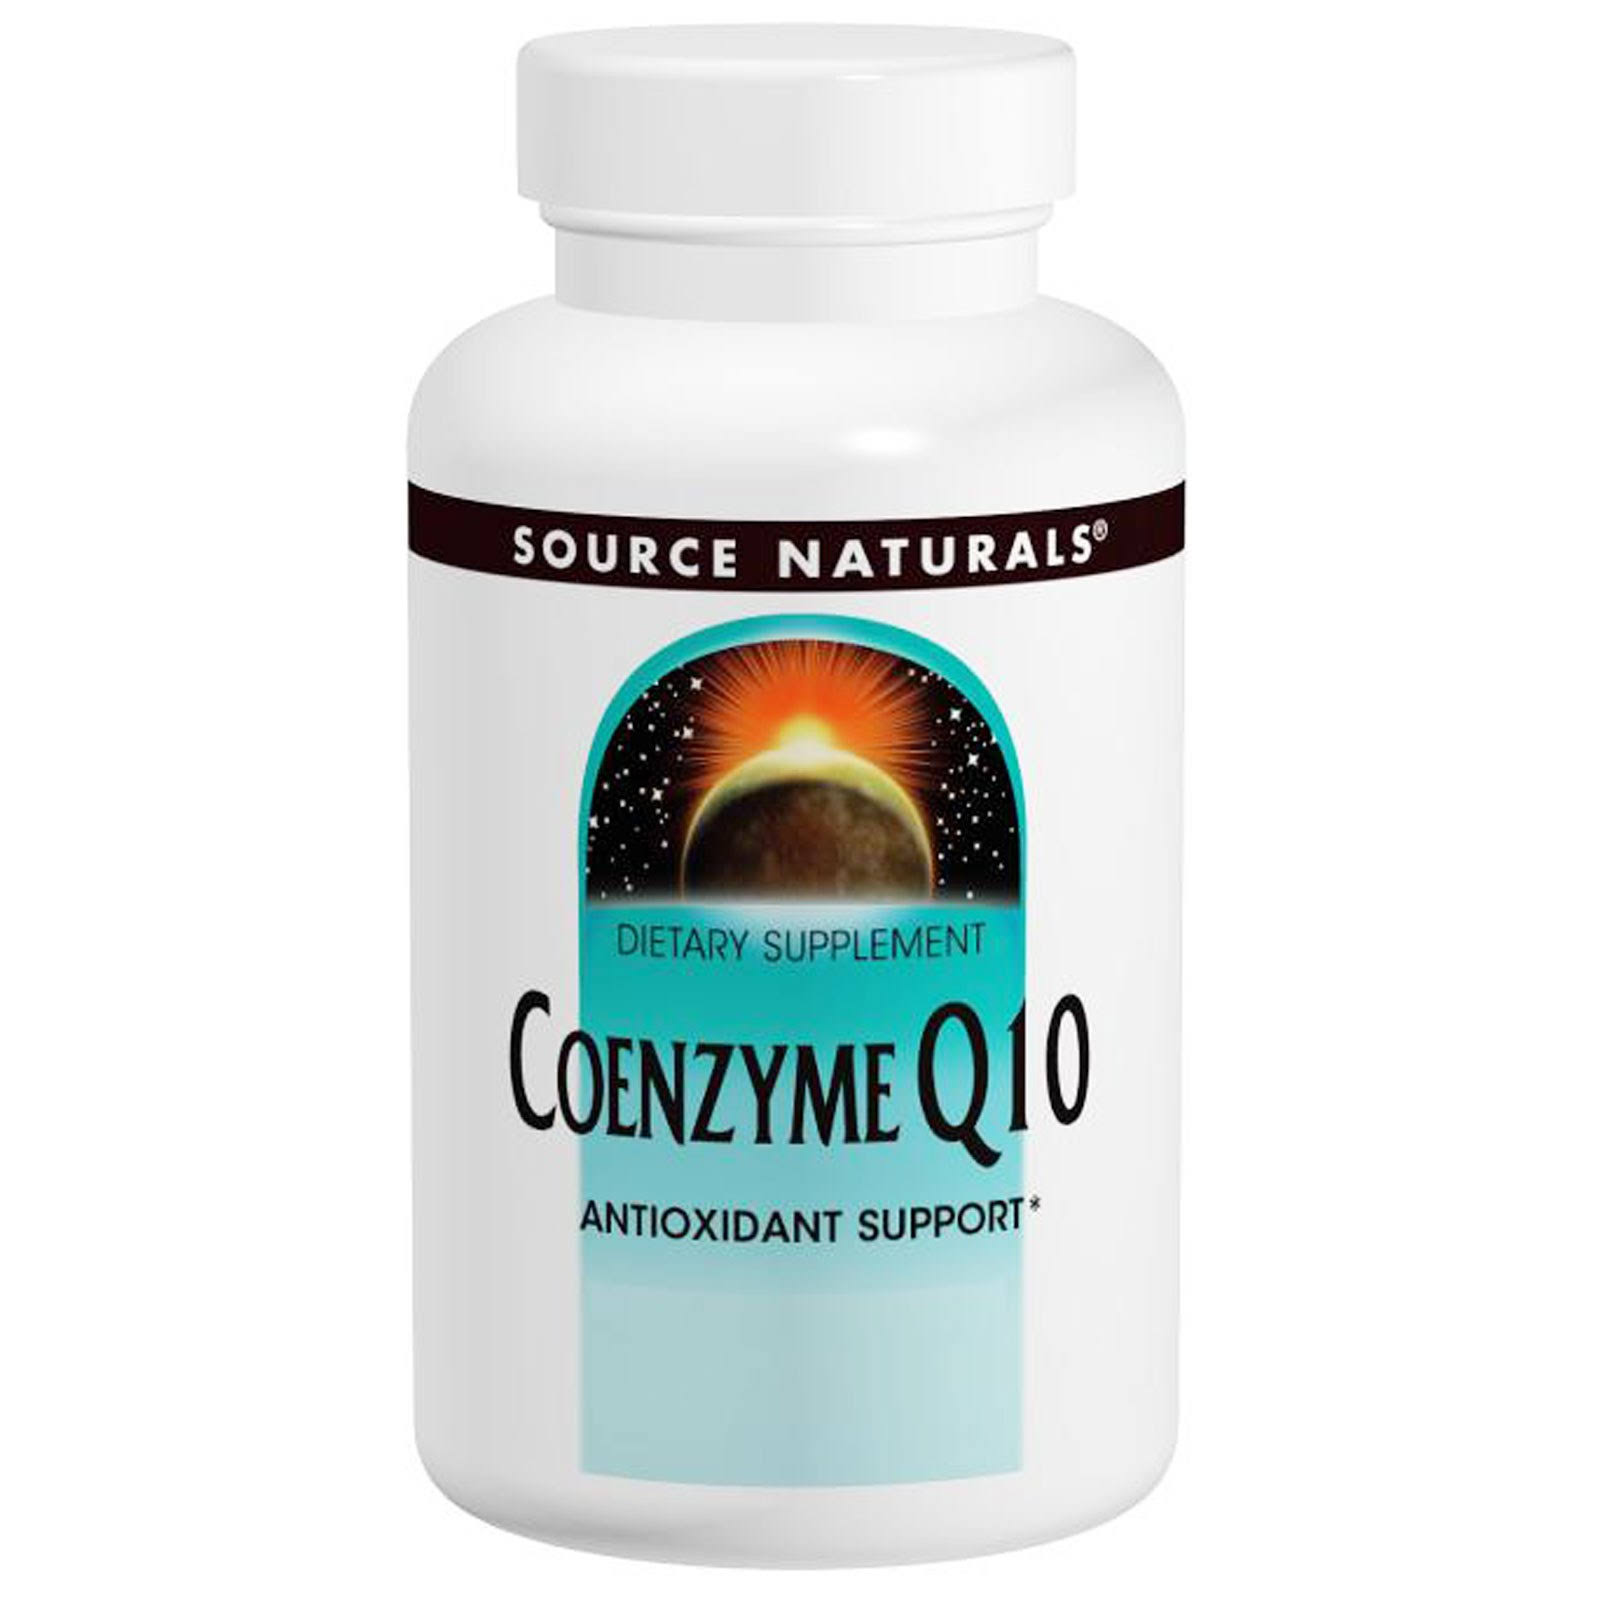 Source Naturals Coenzyme Q10 Supplement - 100mg, 60 Softgels